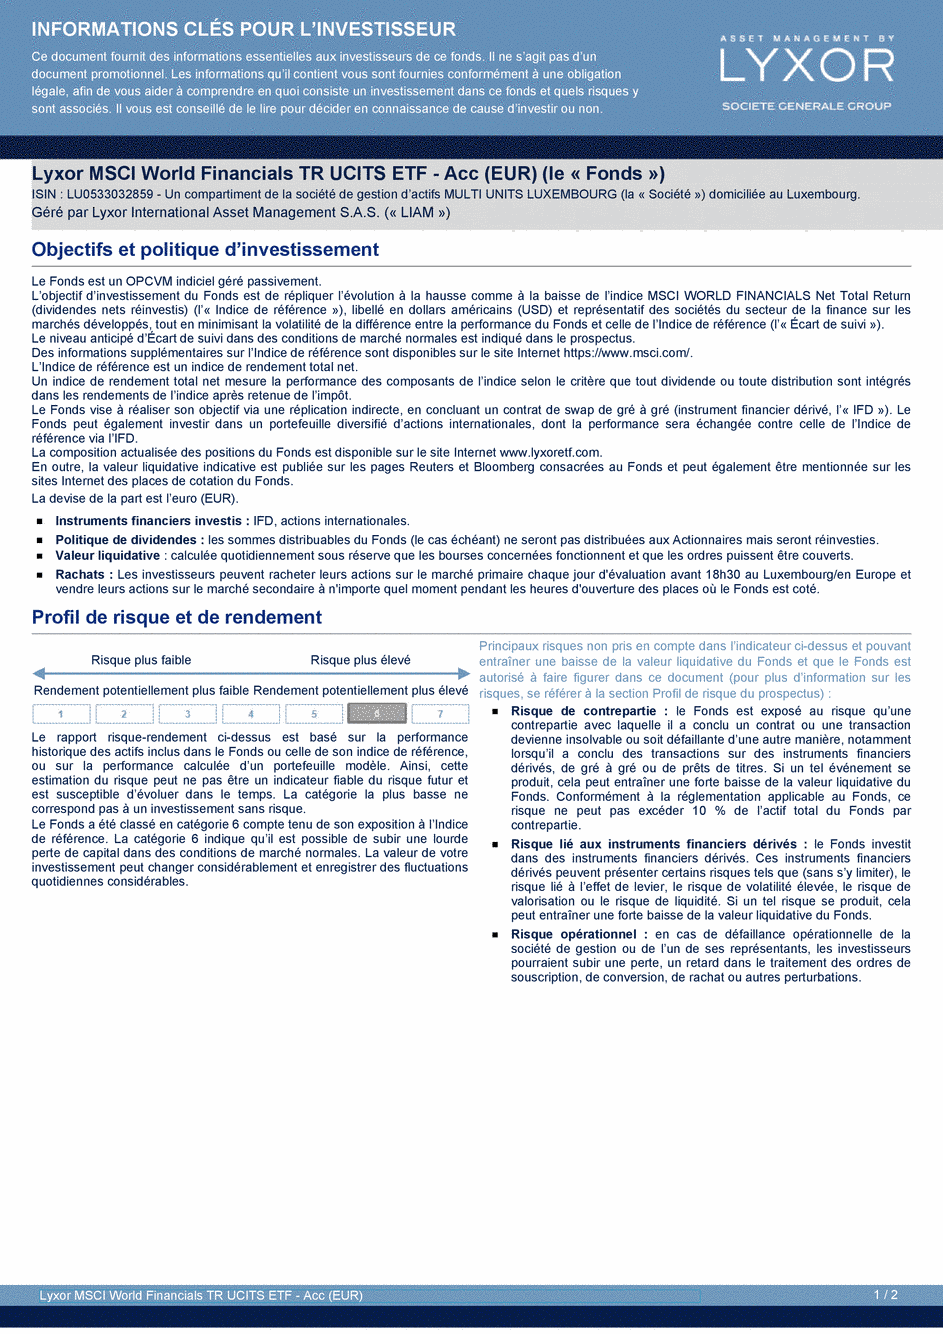 DICI Lyxor MSCI World Financials TR UCITS ETF - Acc (EUR) - 10/07/2020 - Français